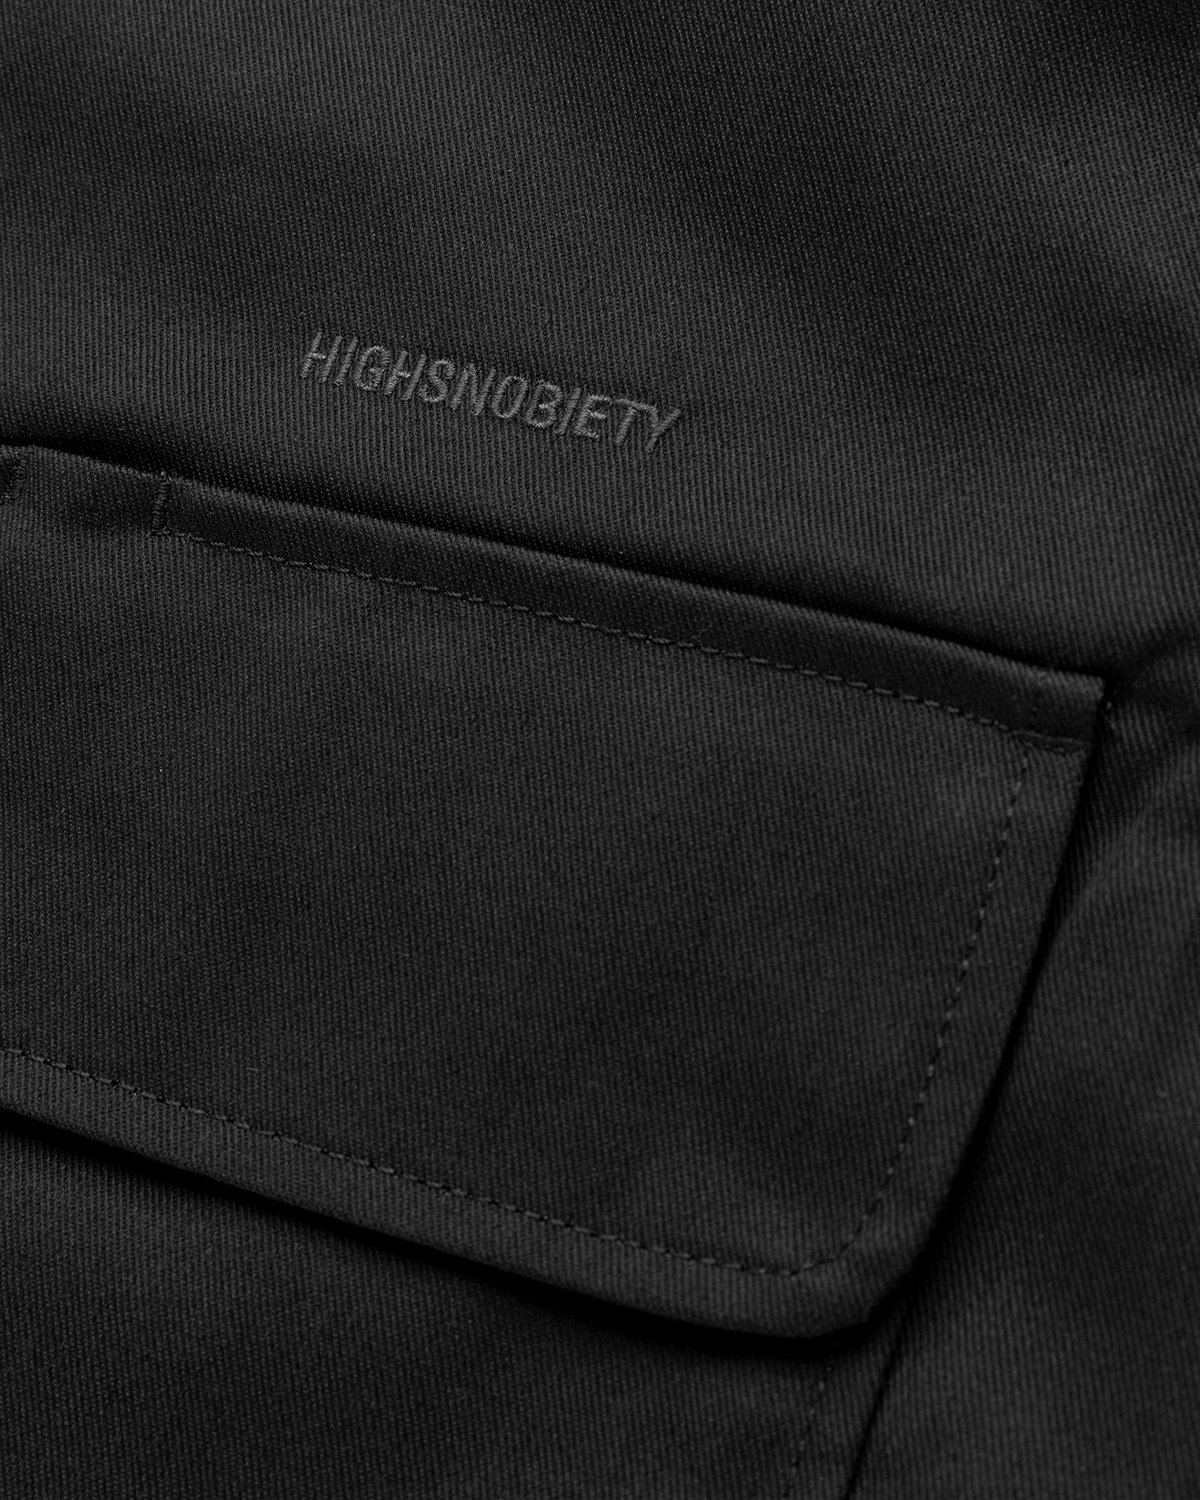 Highsnobiety x Dickies - Service Shirt Black - Clothing - Black - Image 5